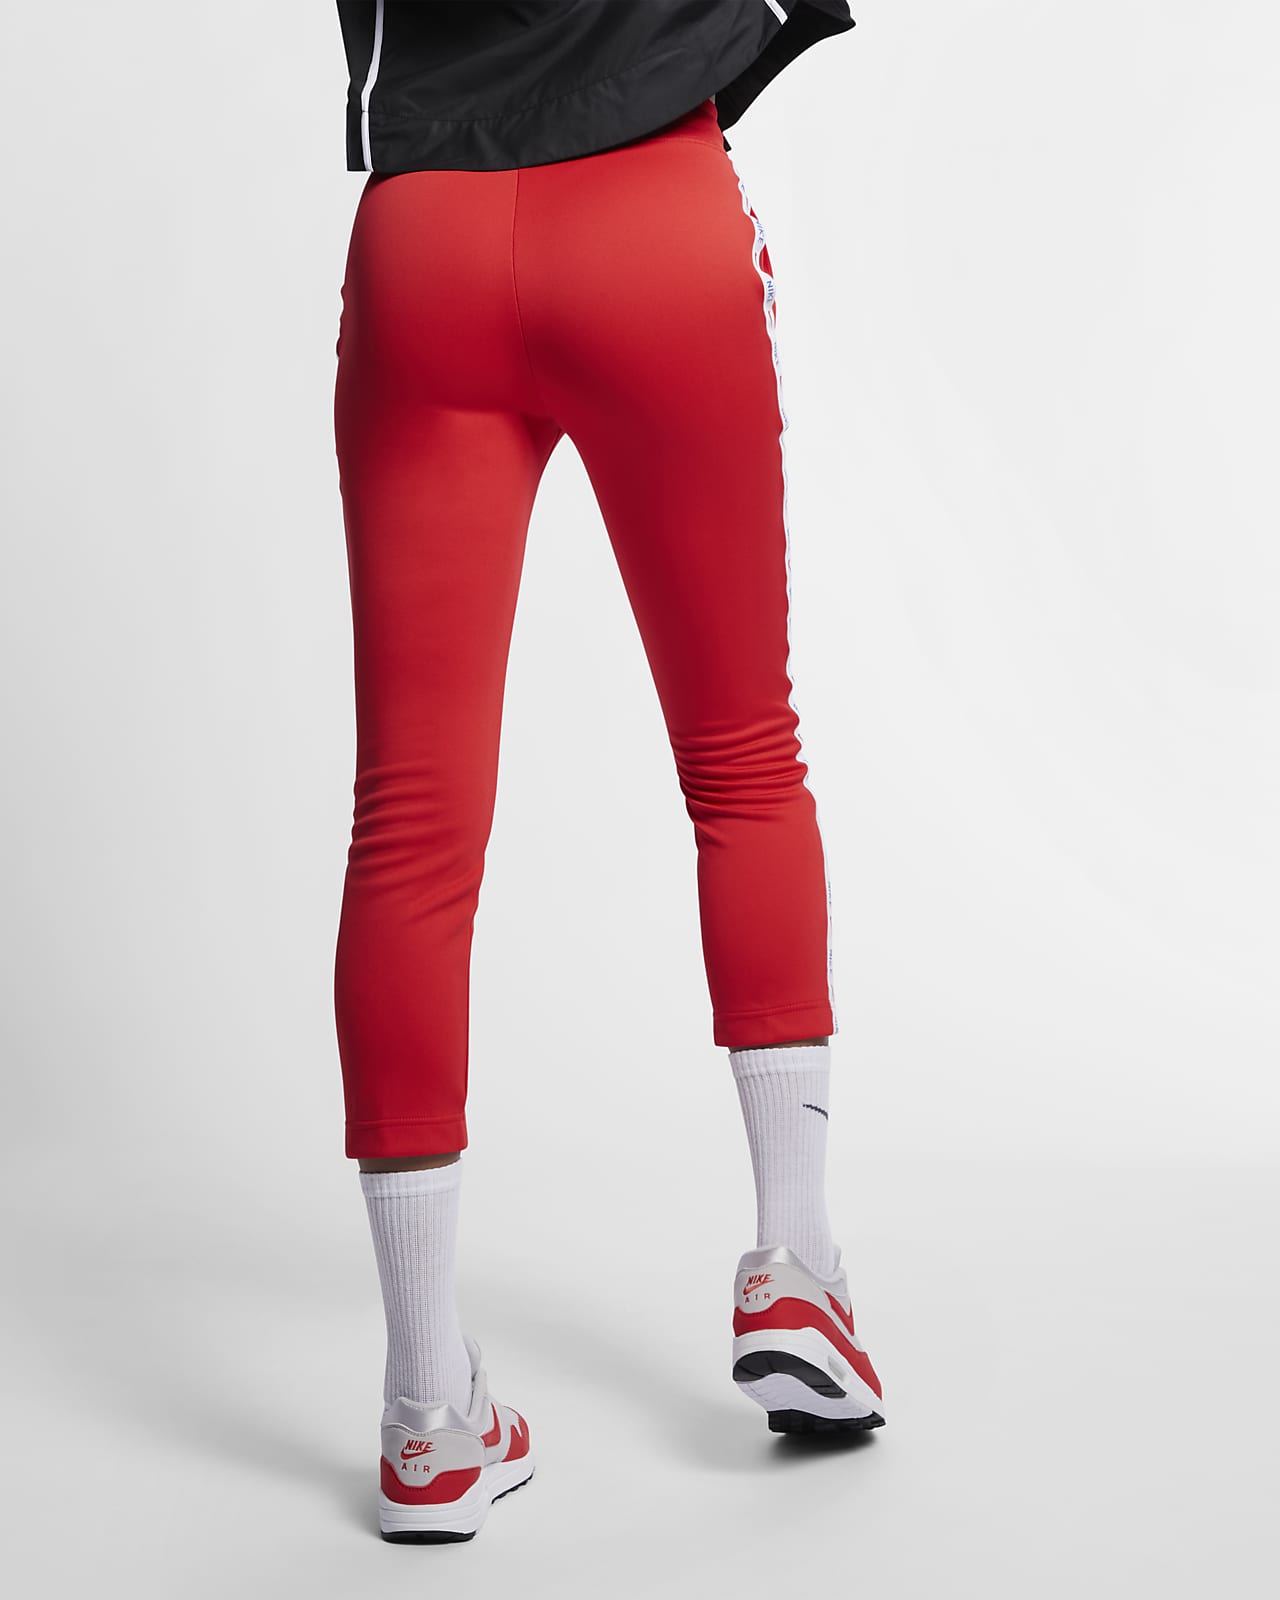 Nike Women's Pro Hyperwarm Stripe Training Tights, Red, M : :  Clothing & Accessories